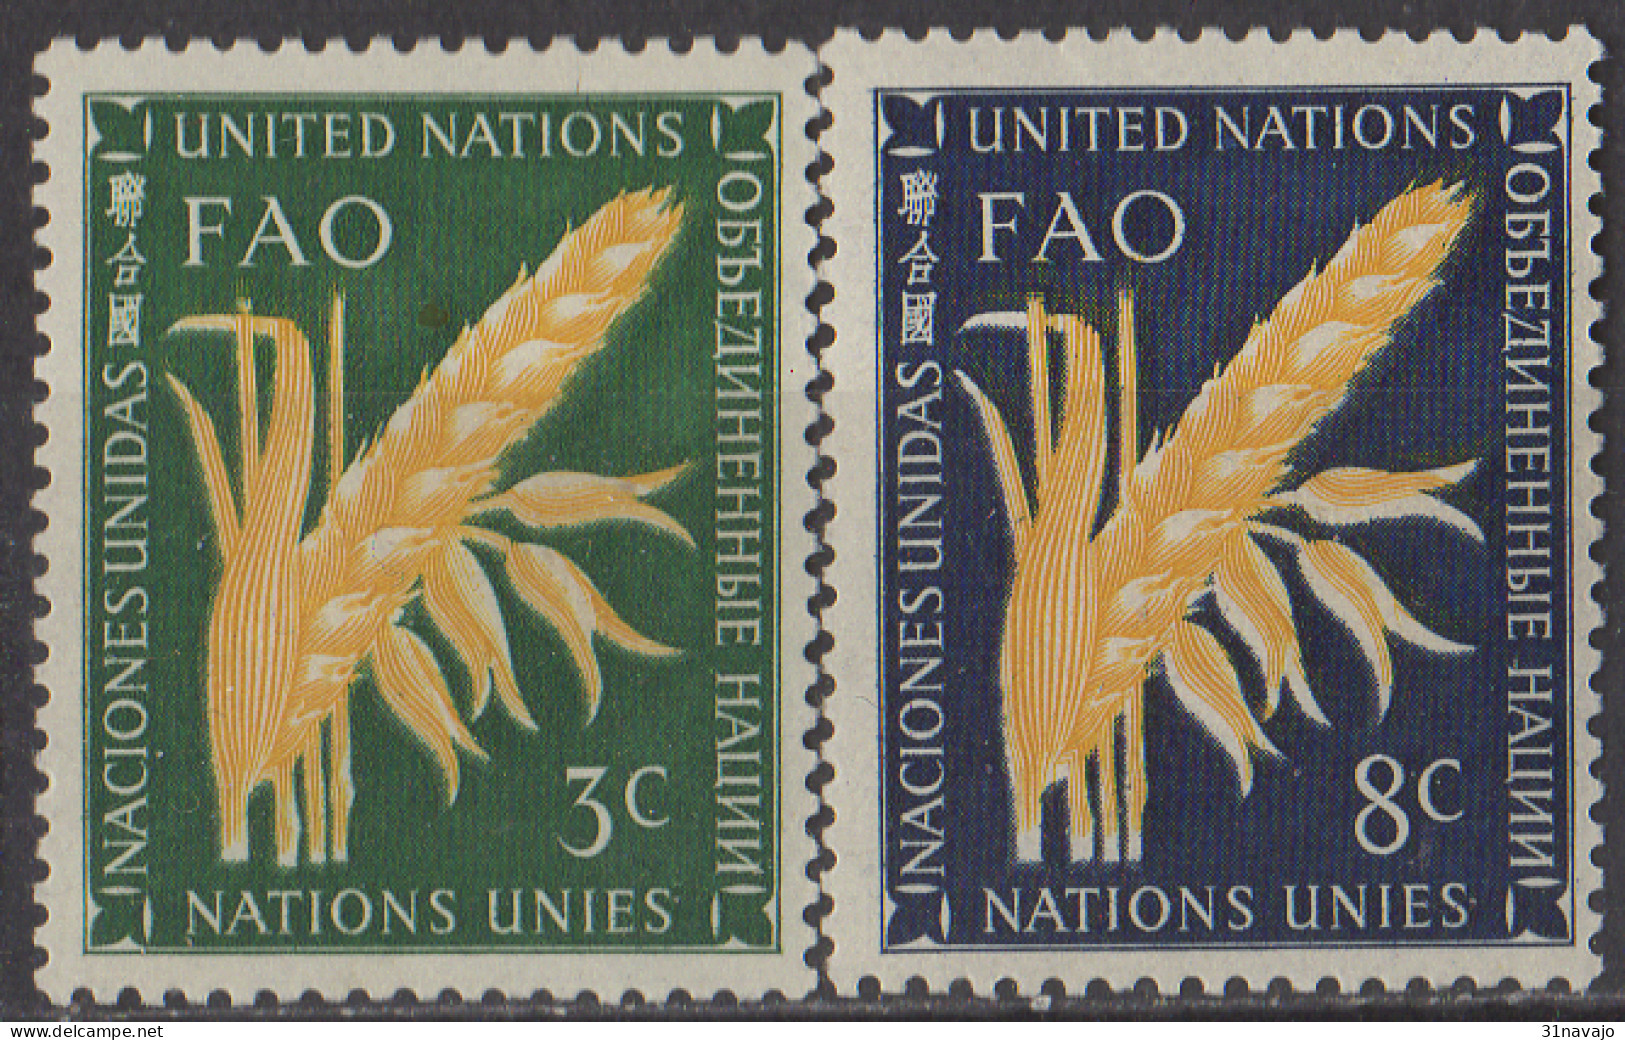 NATIONS UNIES (New York) - Organisation Pour L'alimentation Et L'agriculture - Unused Stamps